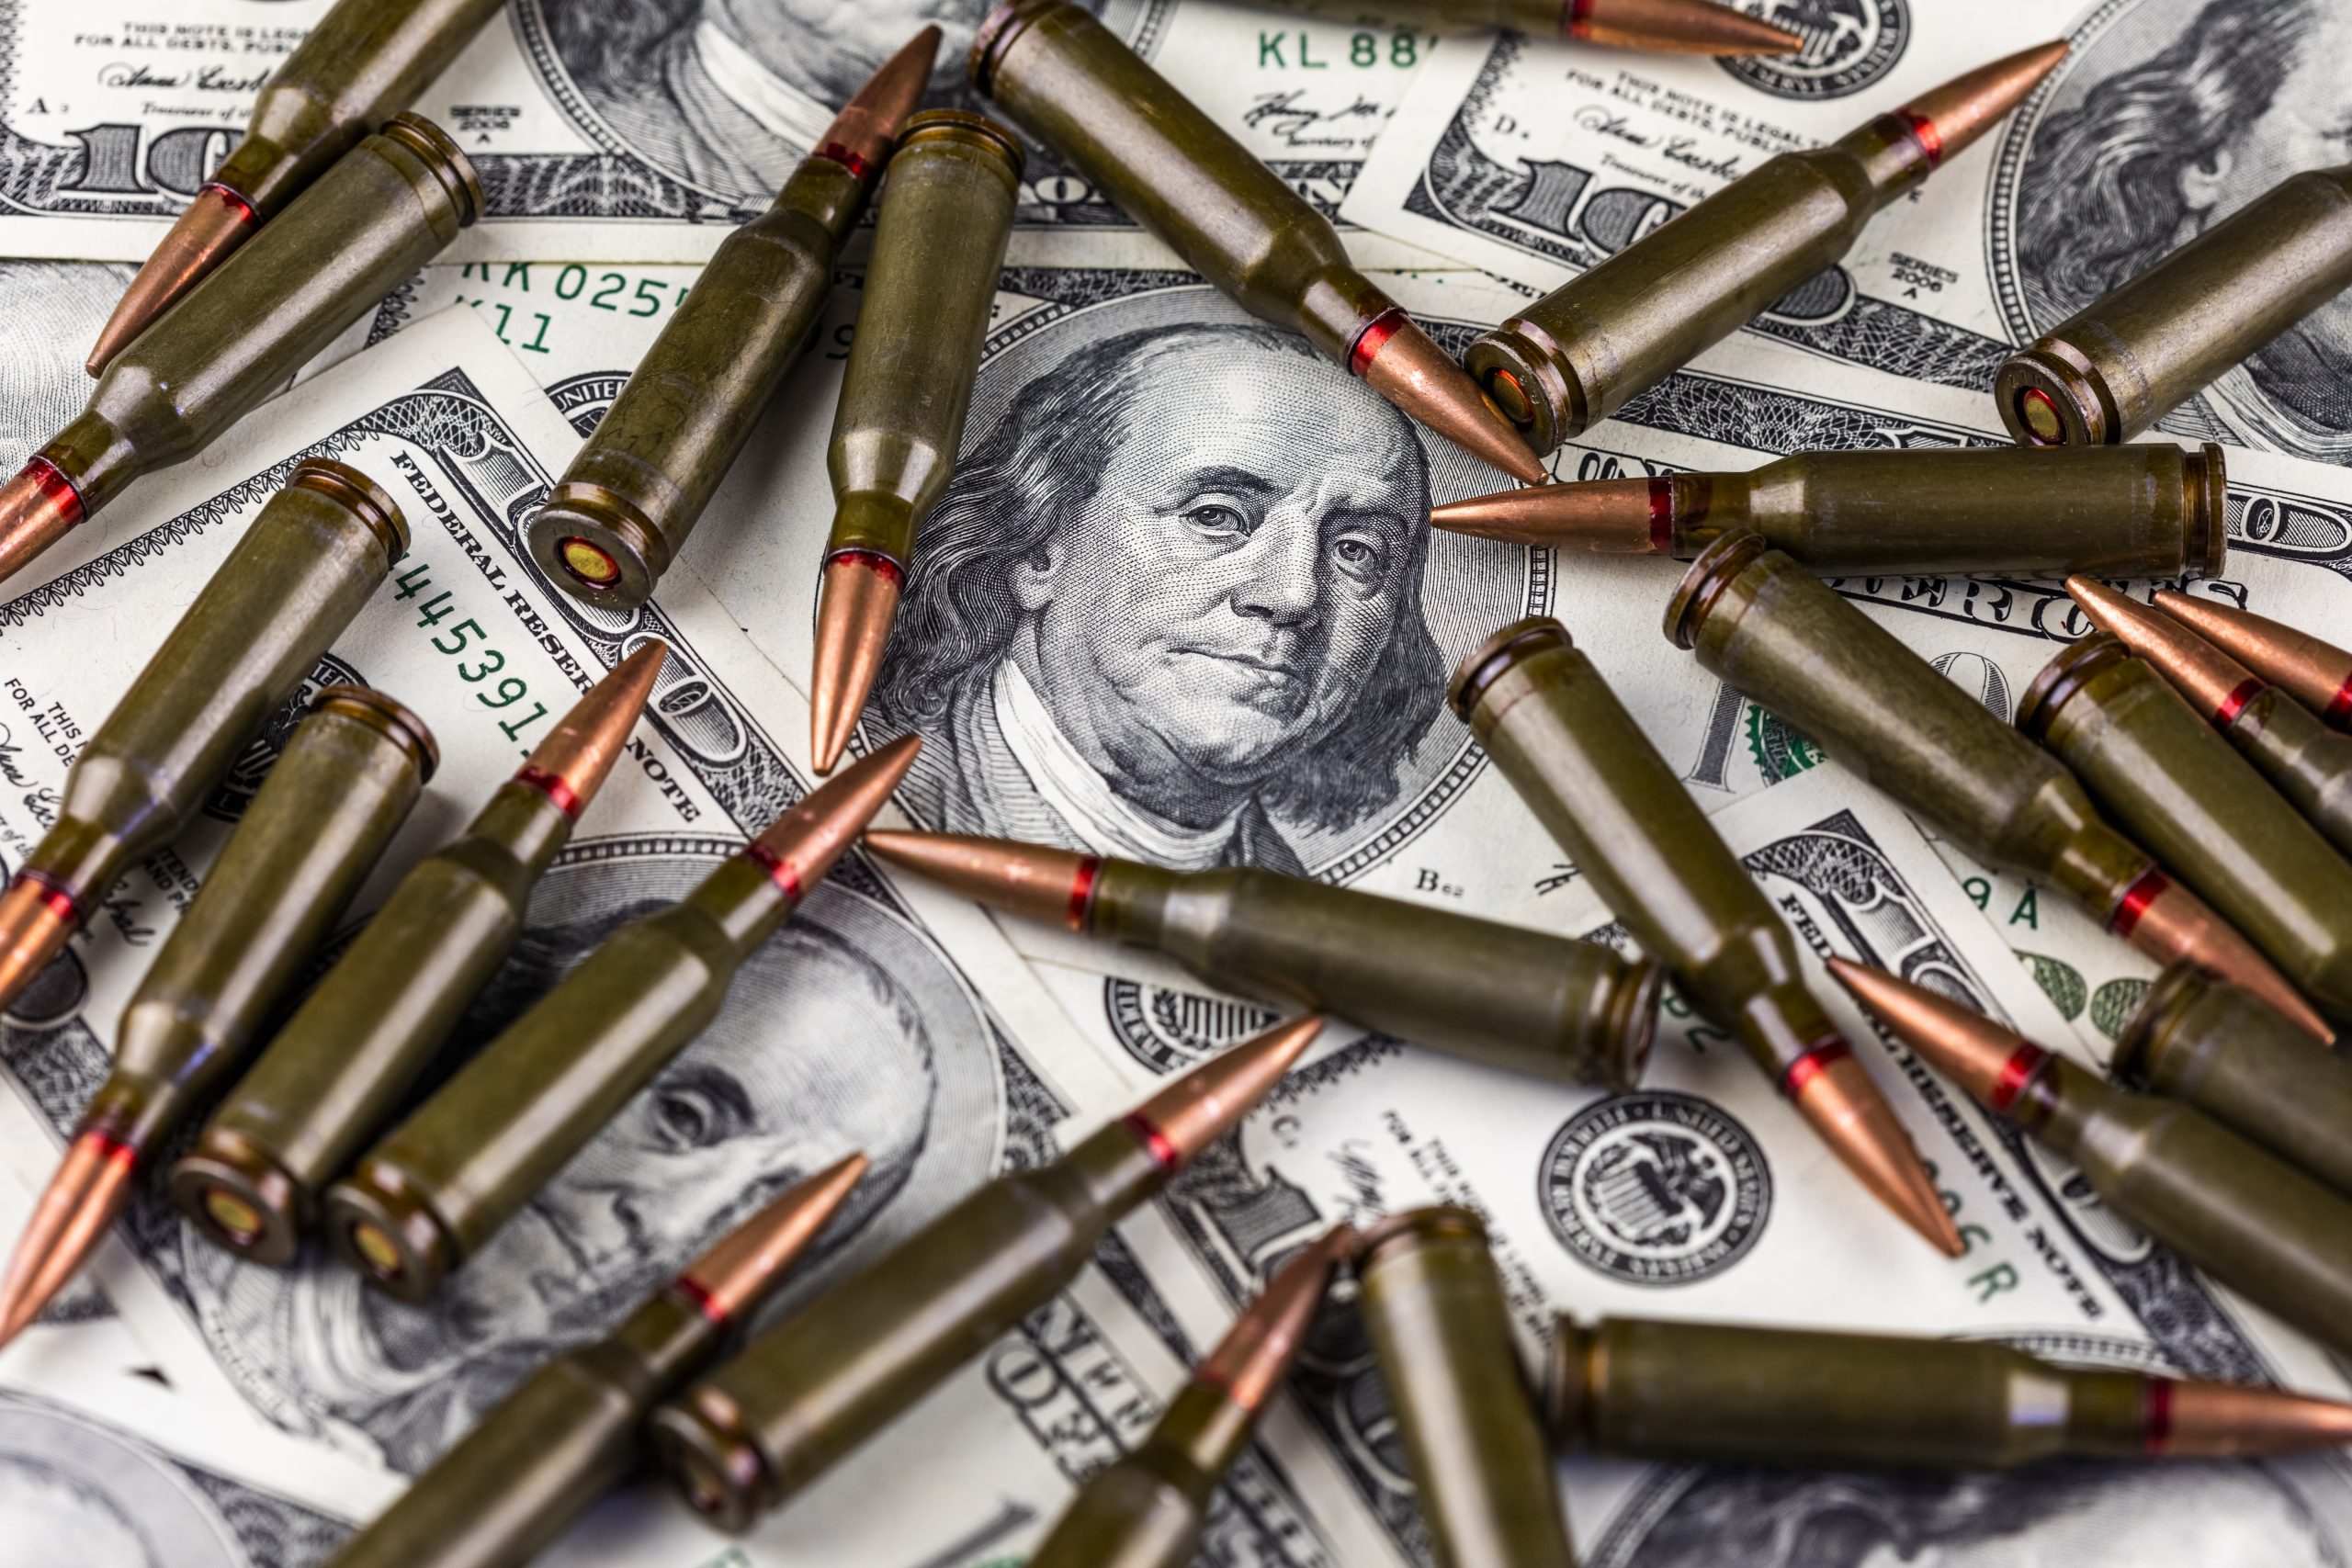 Hundred dollar bills and machine gun cartridges. Concept of economic crisis due to war